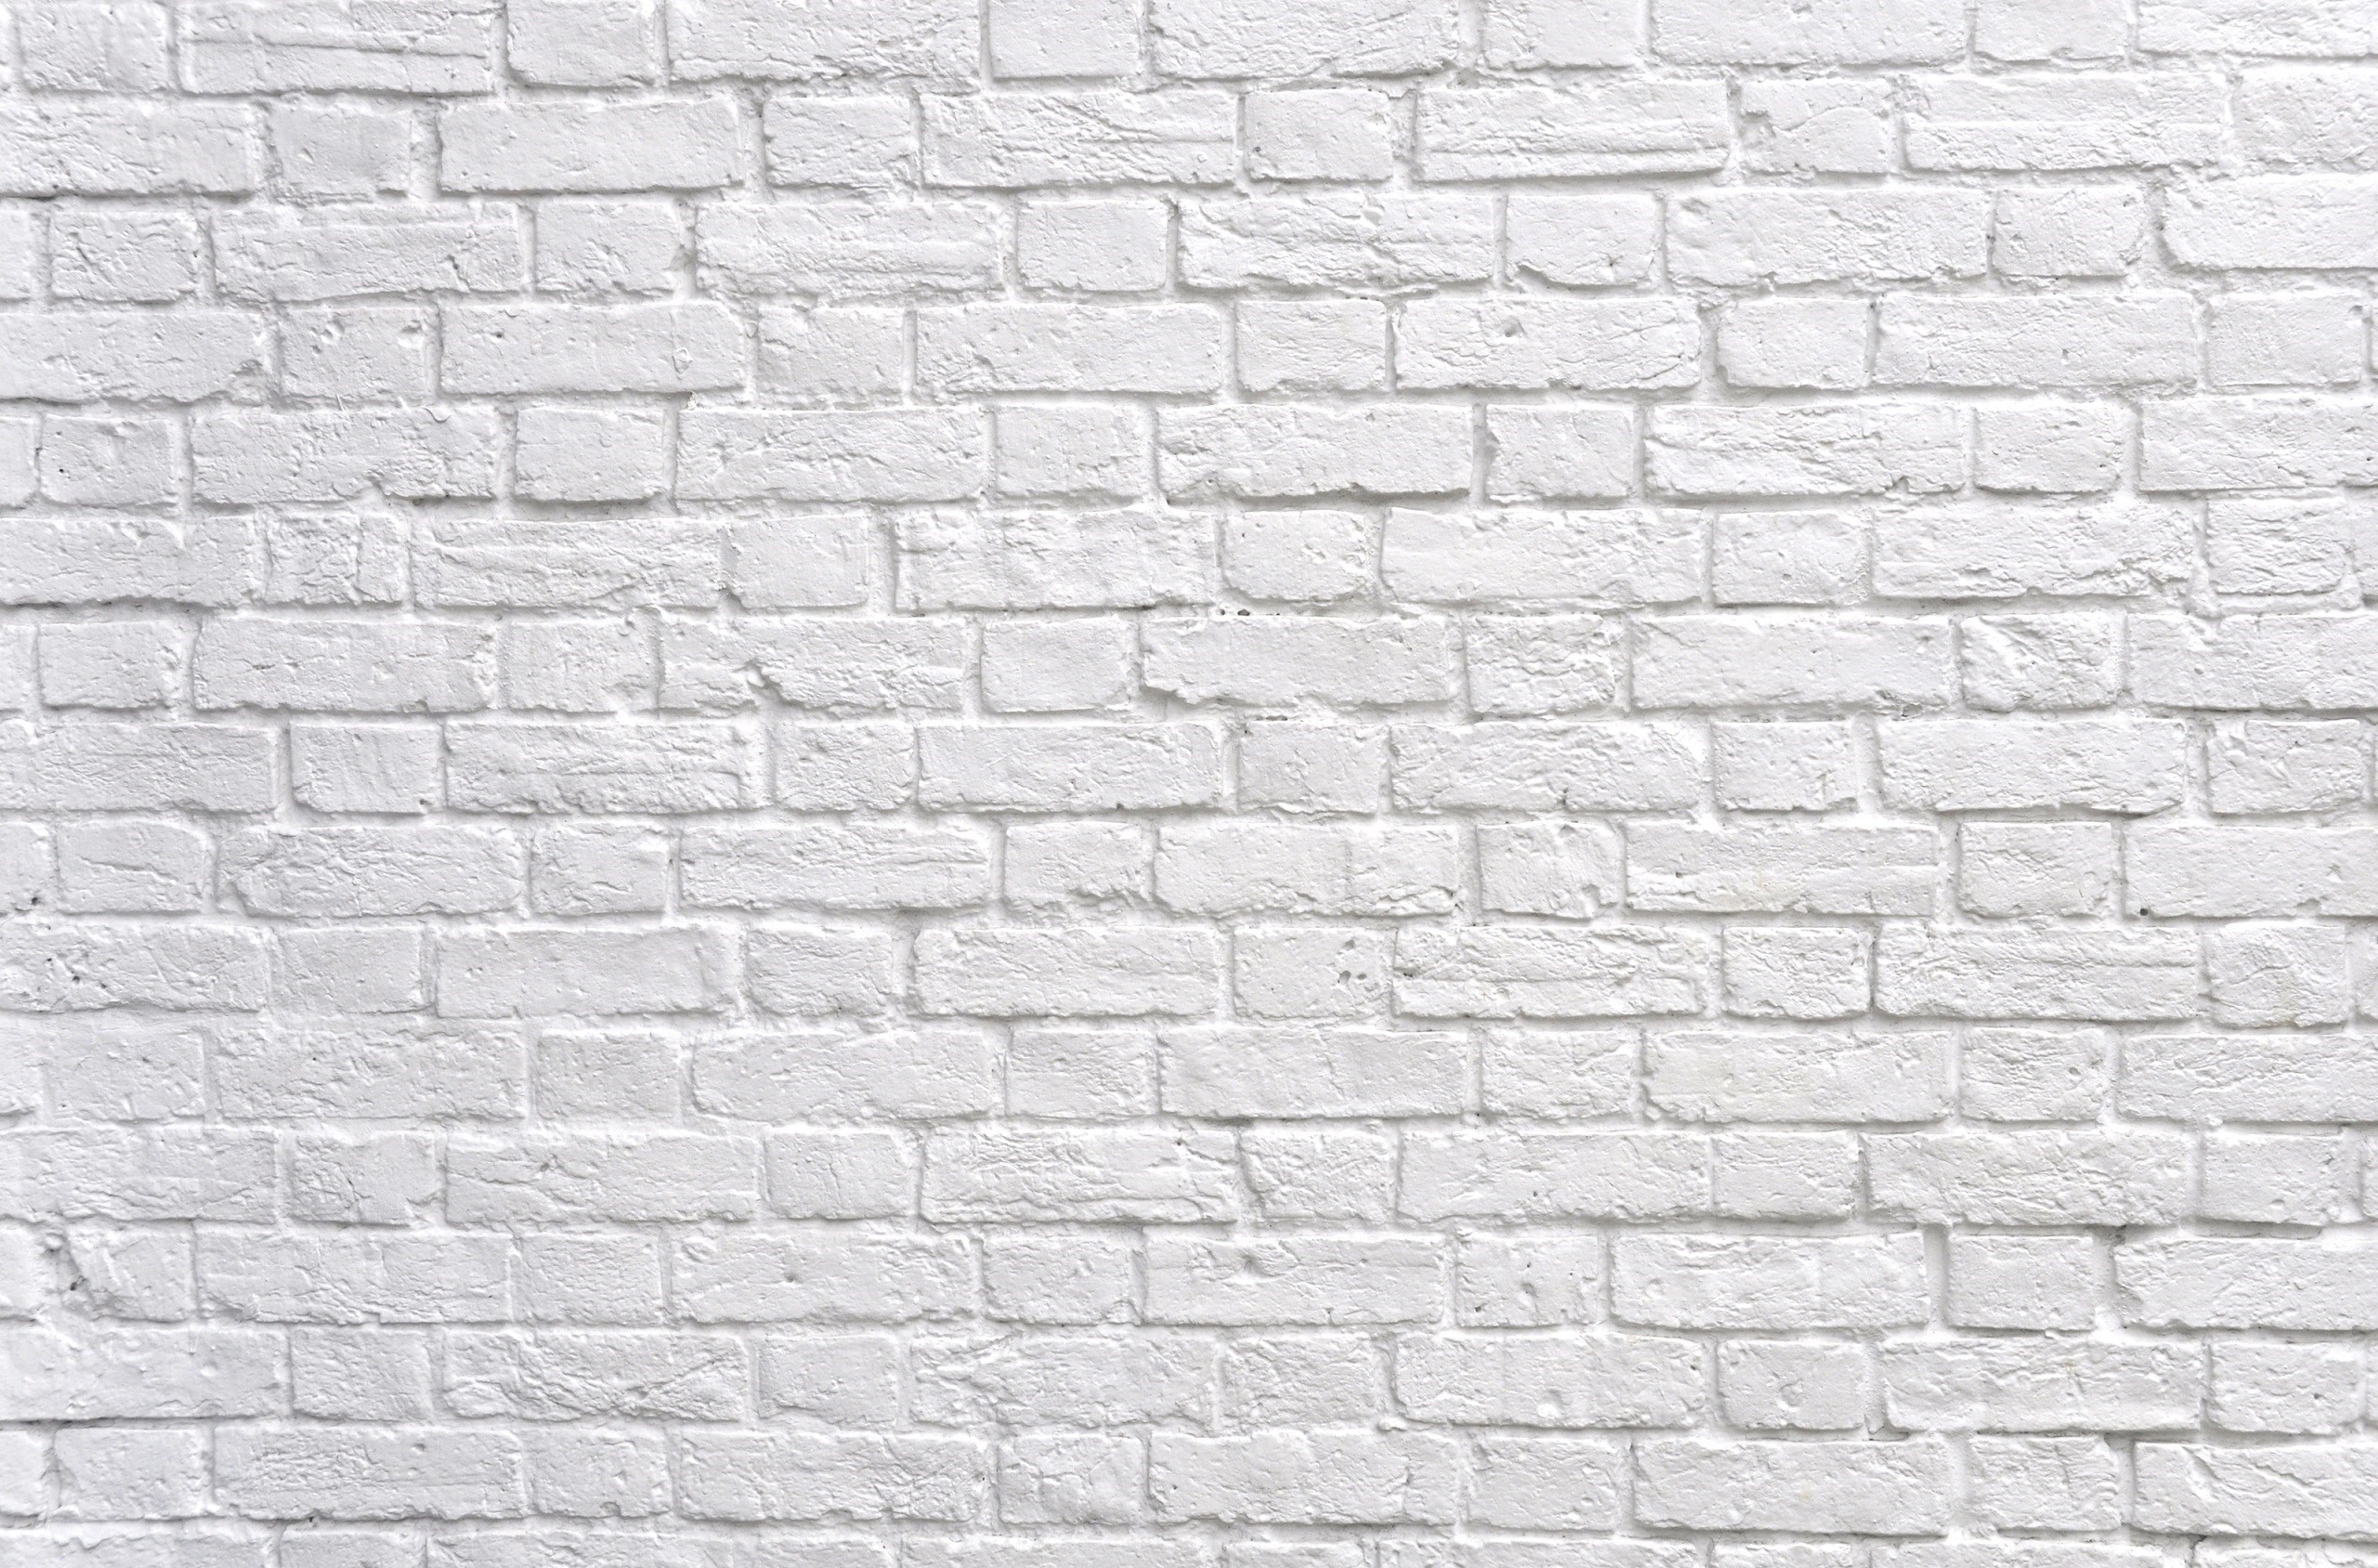 Black And White Brick Wall Background White Brick Wall Image Decoration Picture White Brick Wall 